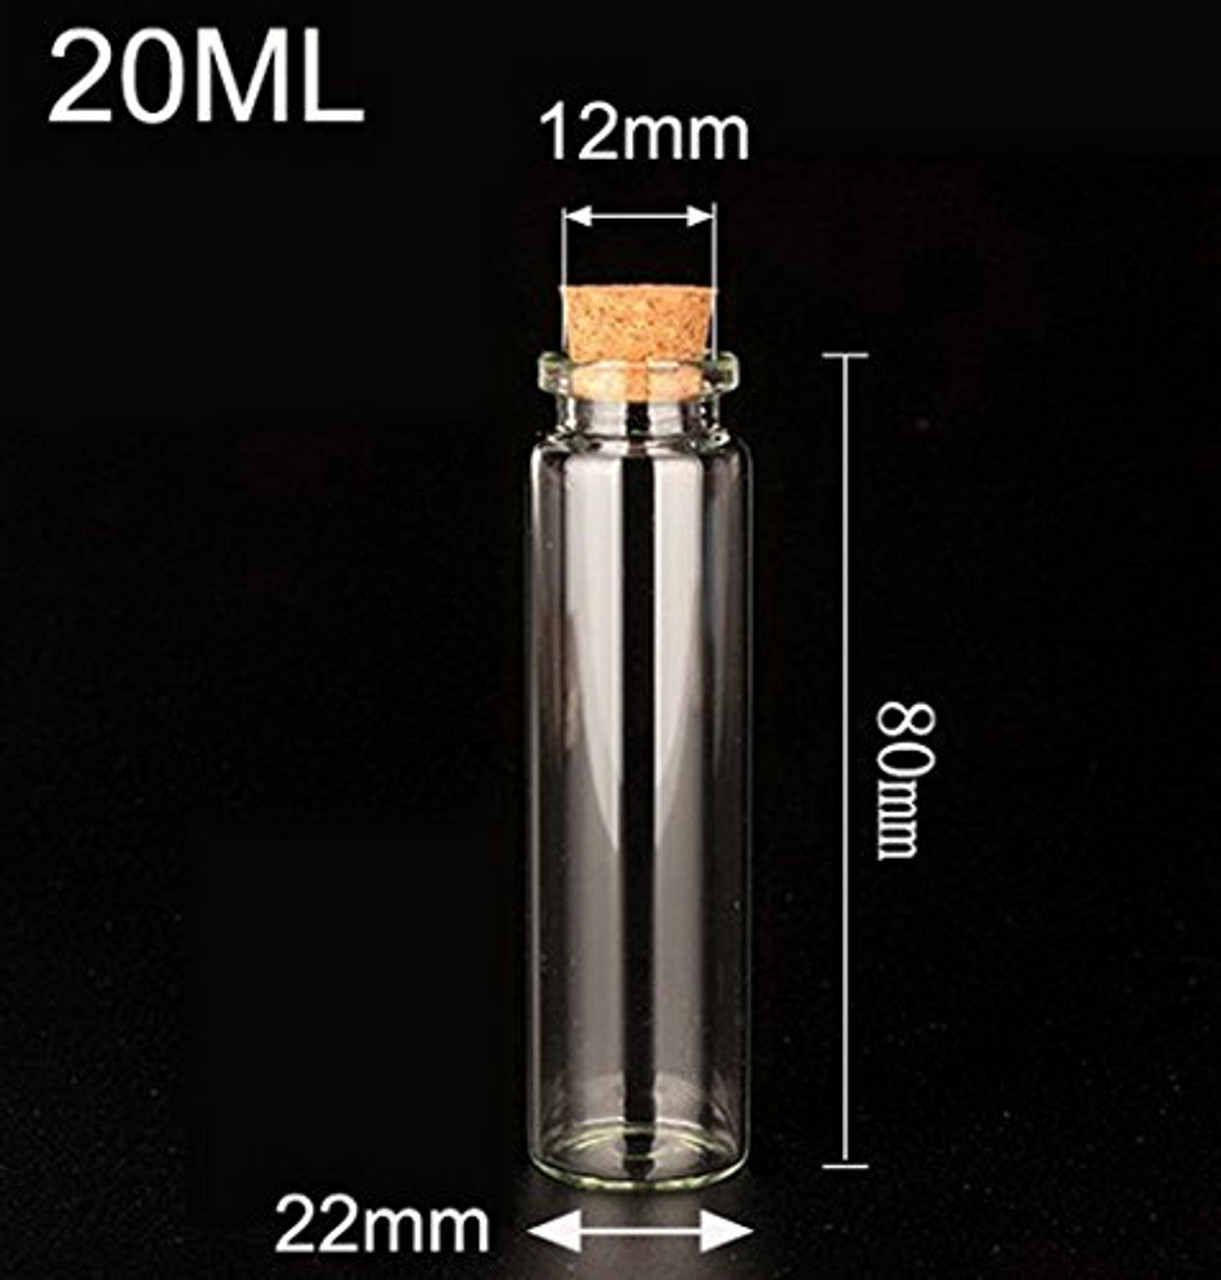  MaxMau 24pcs Mini Glass Bottles with Cork Stoppers 5ml